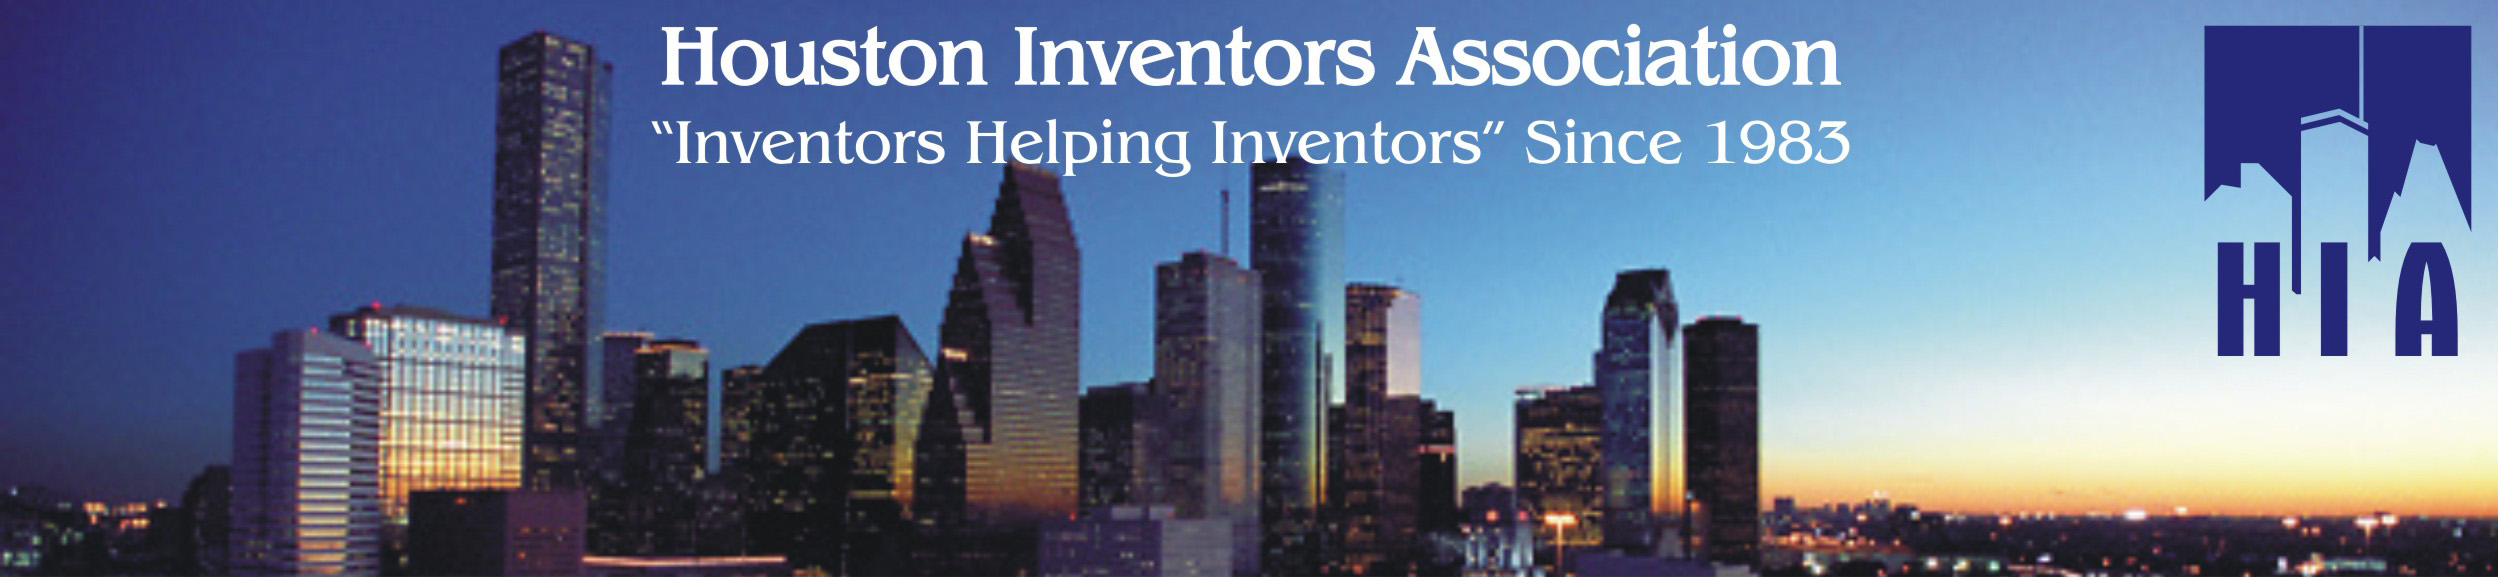 Houston Inventors Association - <h1>Inventors Helping Inventors Since 1983</h1>